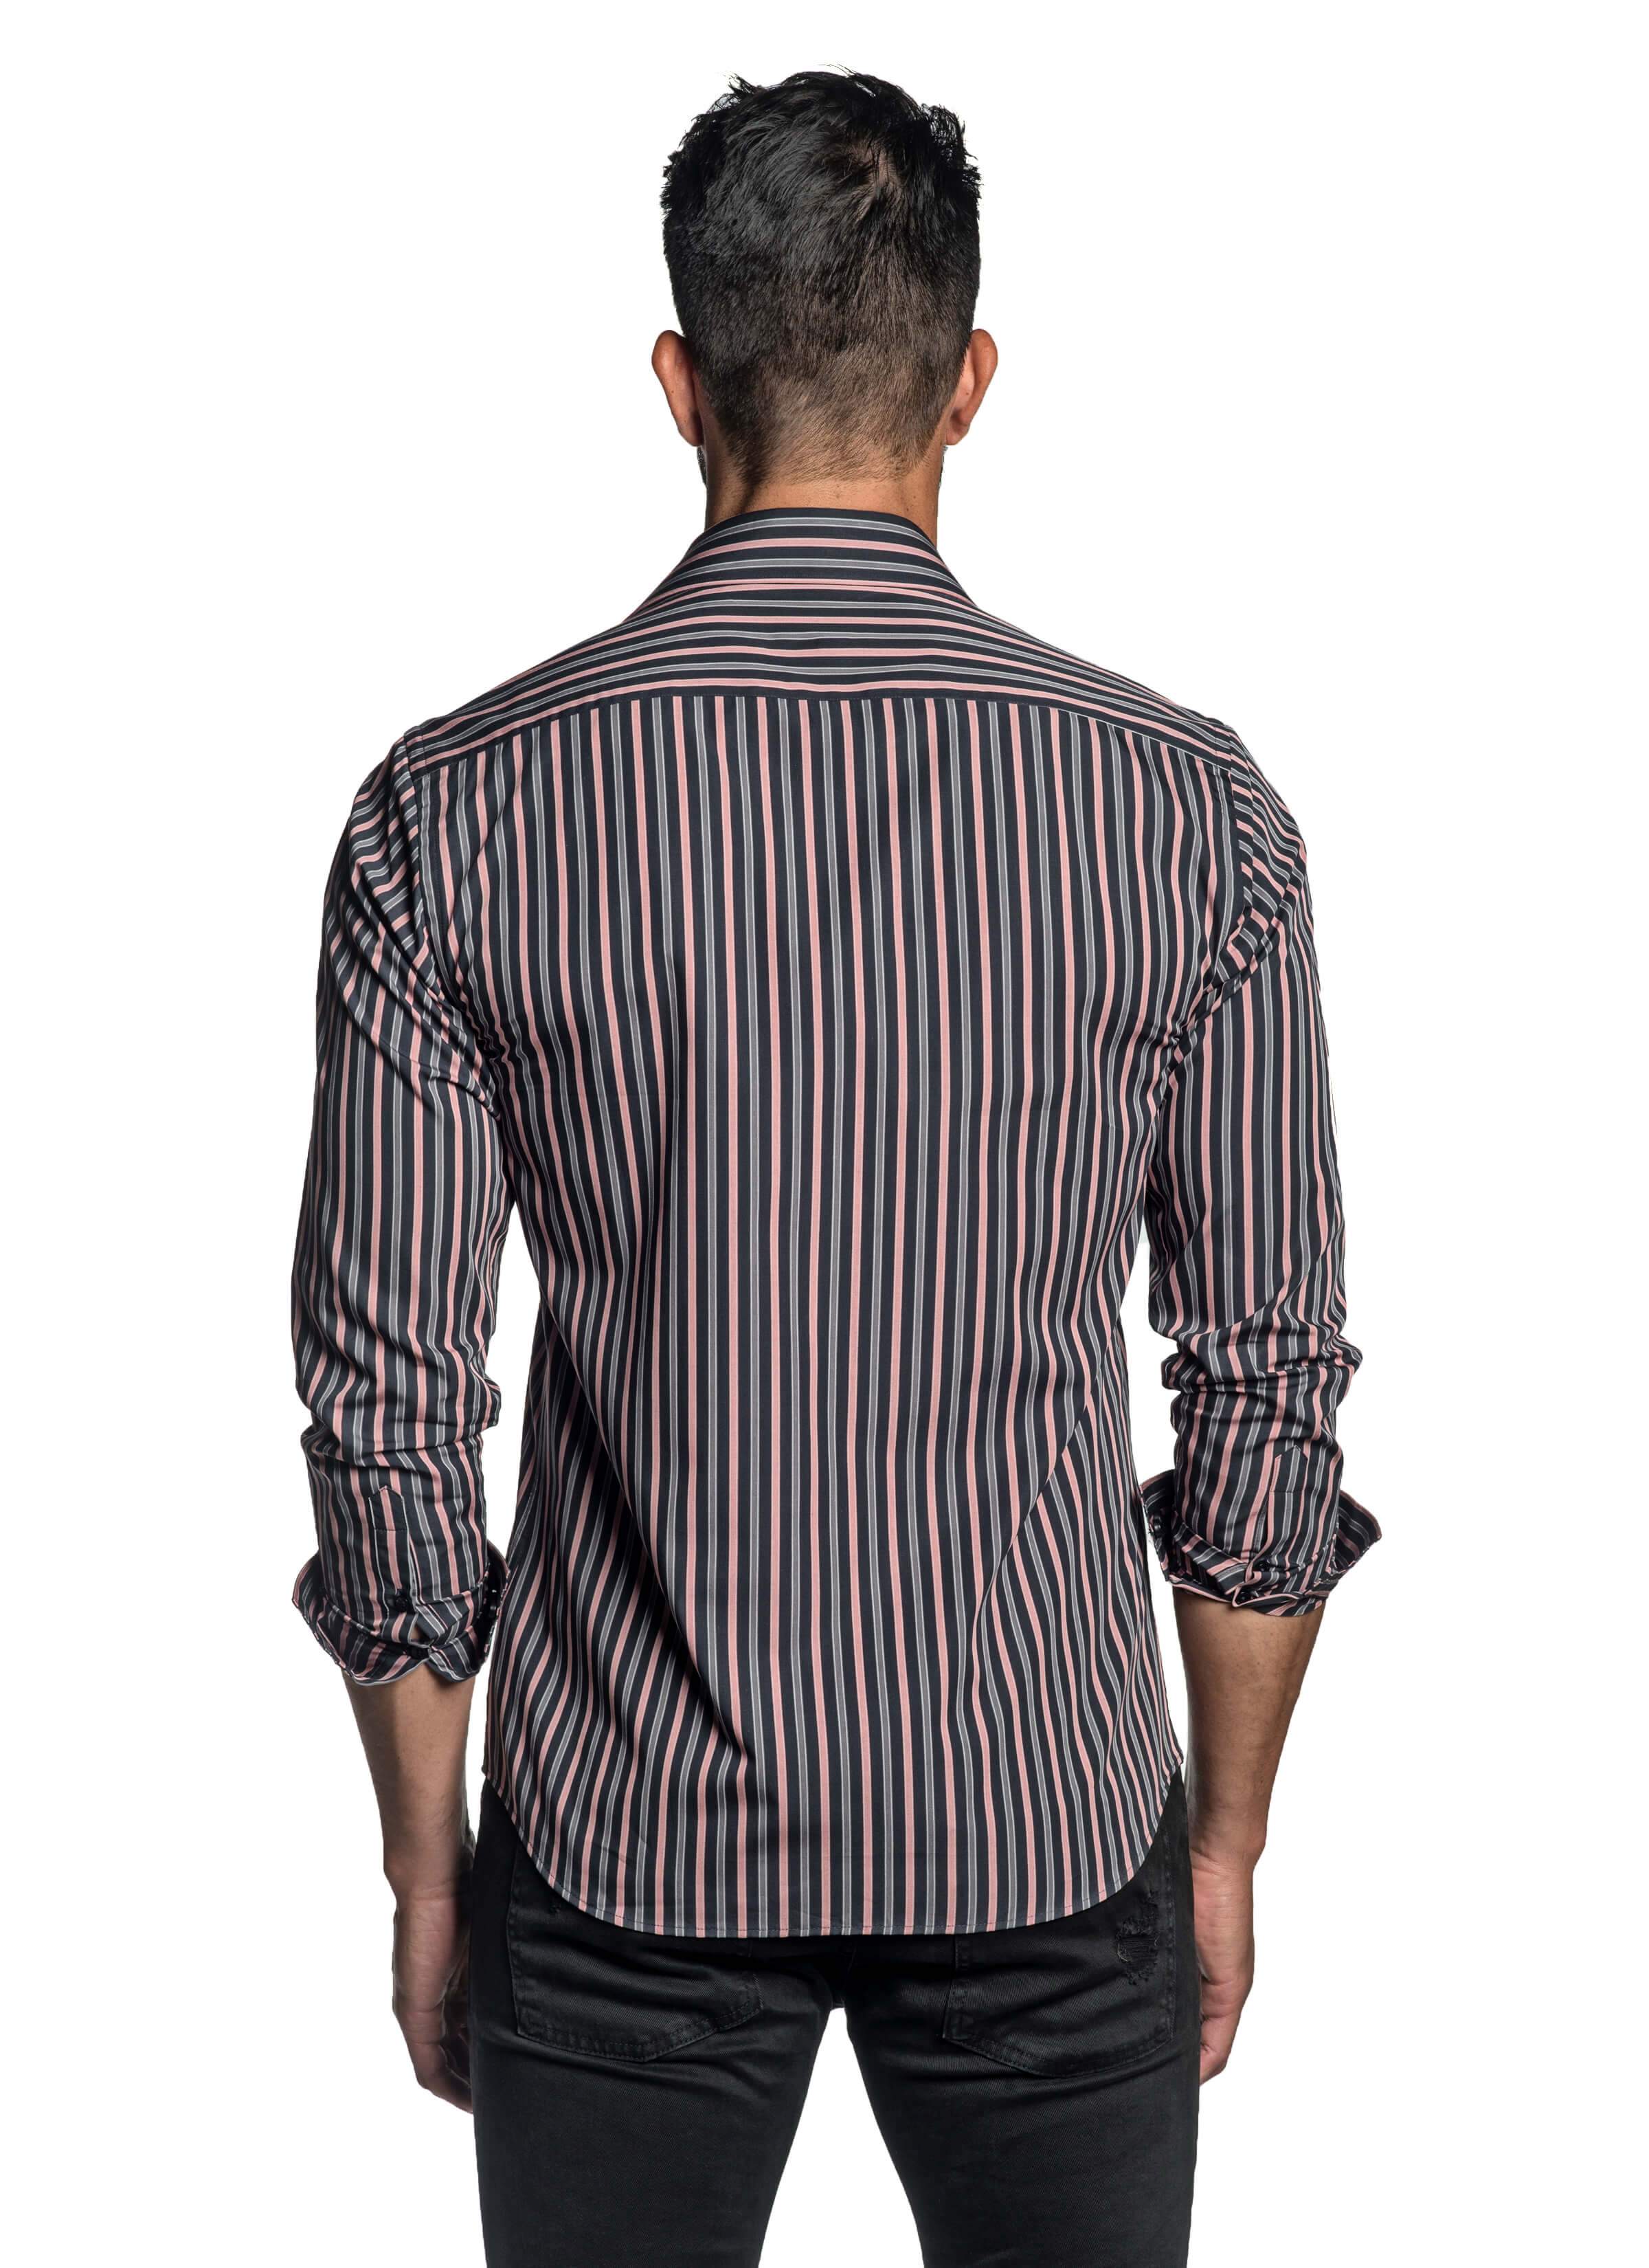 Black Salmon and Grey Stripe Shirt for Men T-2645